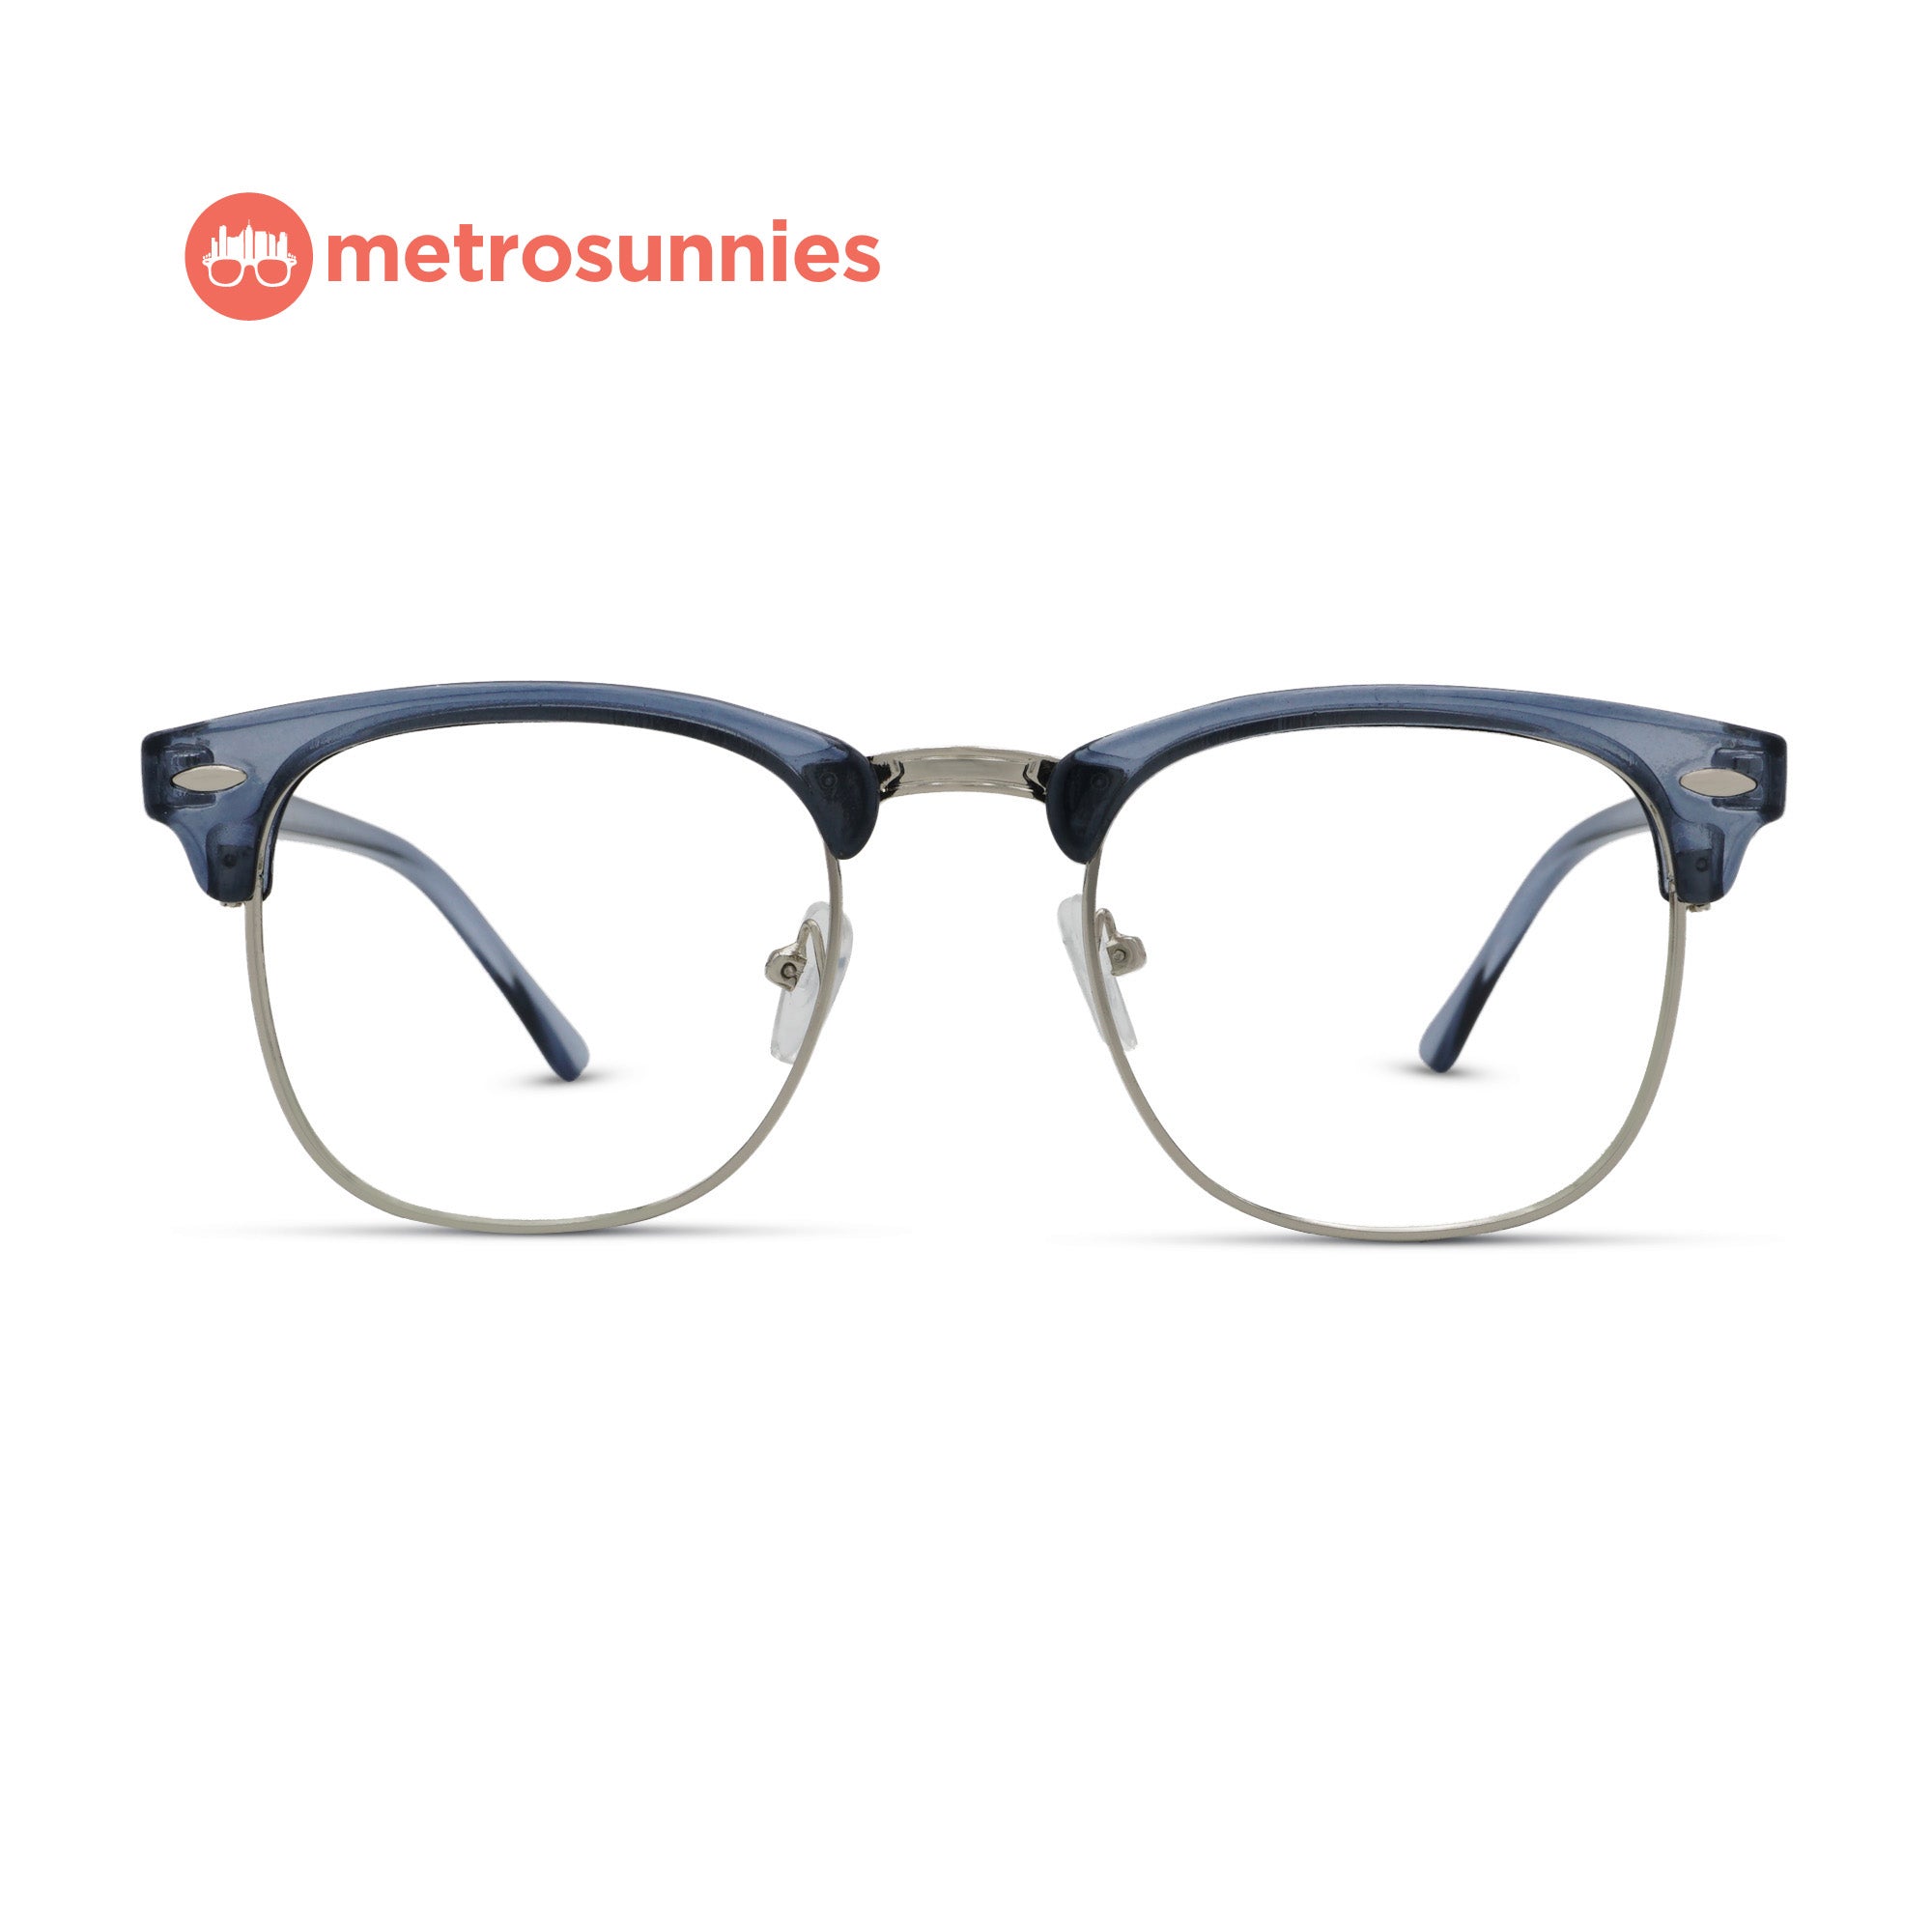 MetroSunnies Midas Specs (Azure) / Replaceable Lens / Eyeglasses for Men and Women